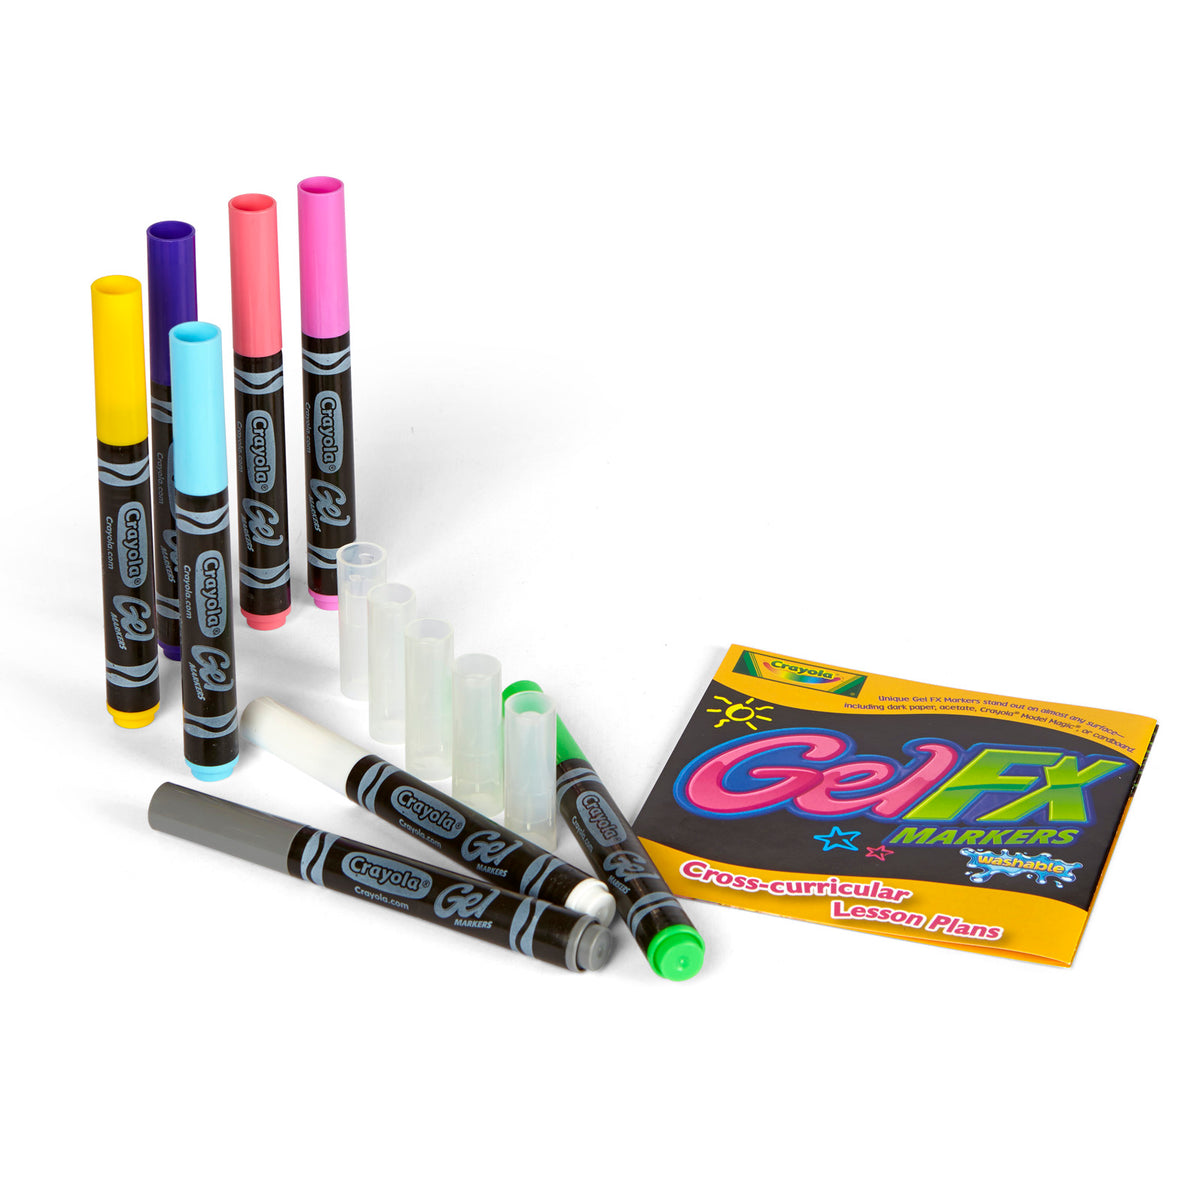 Crayola 80 Count GEL FX Markers Classpack 8 Colors for sale online 